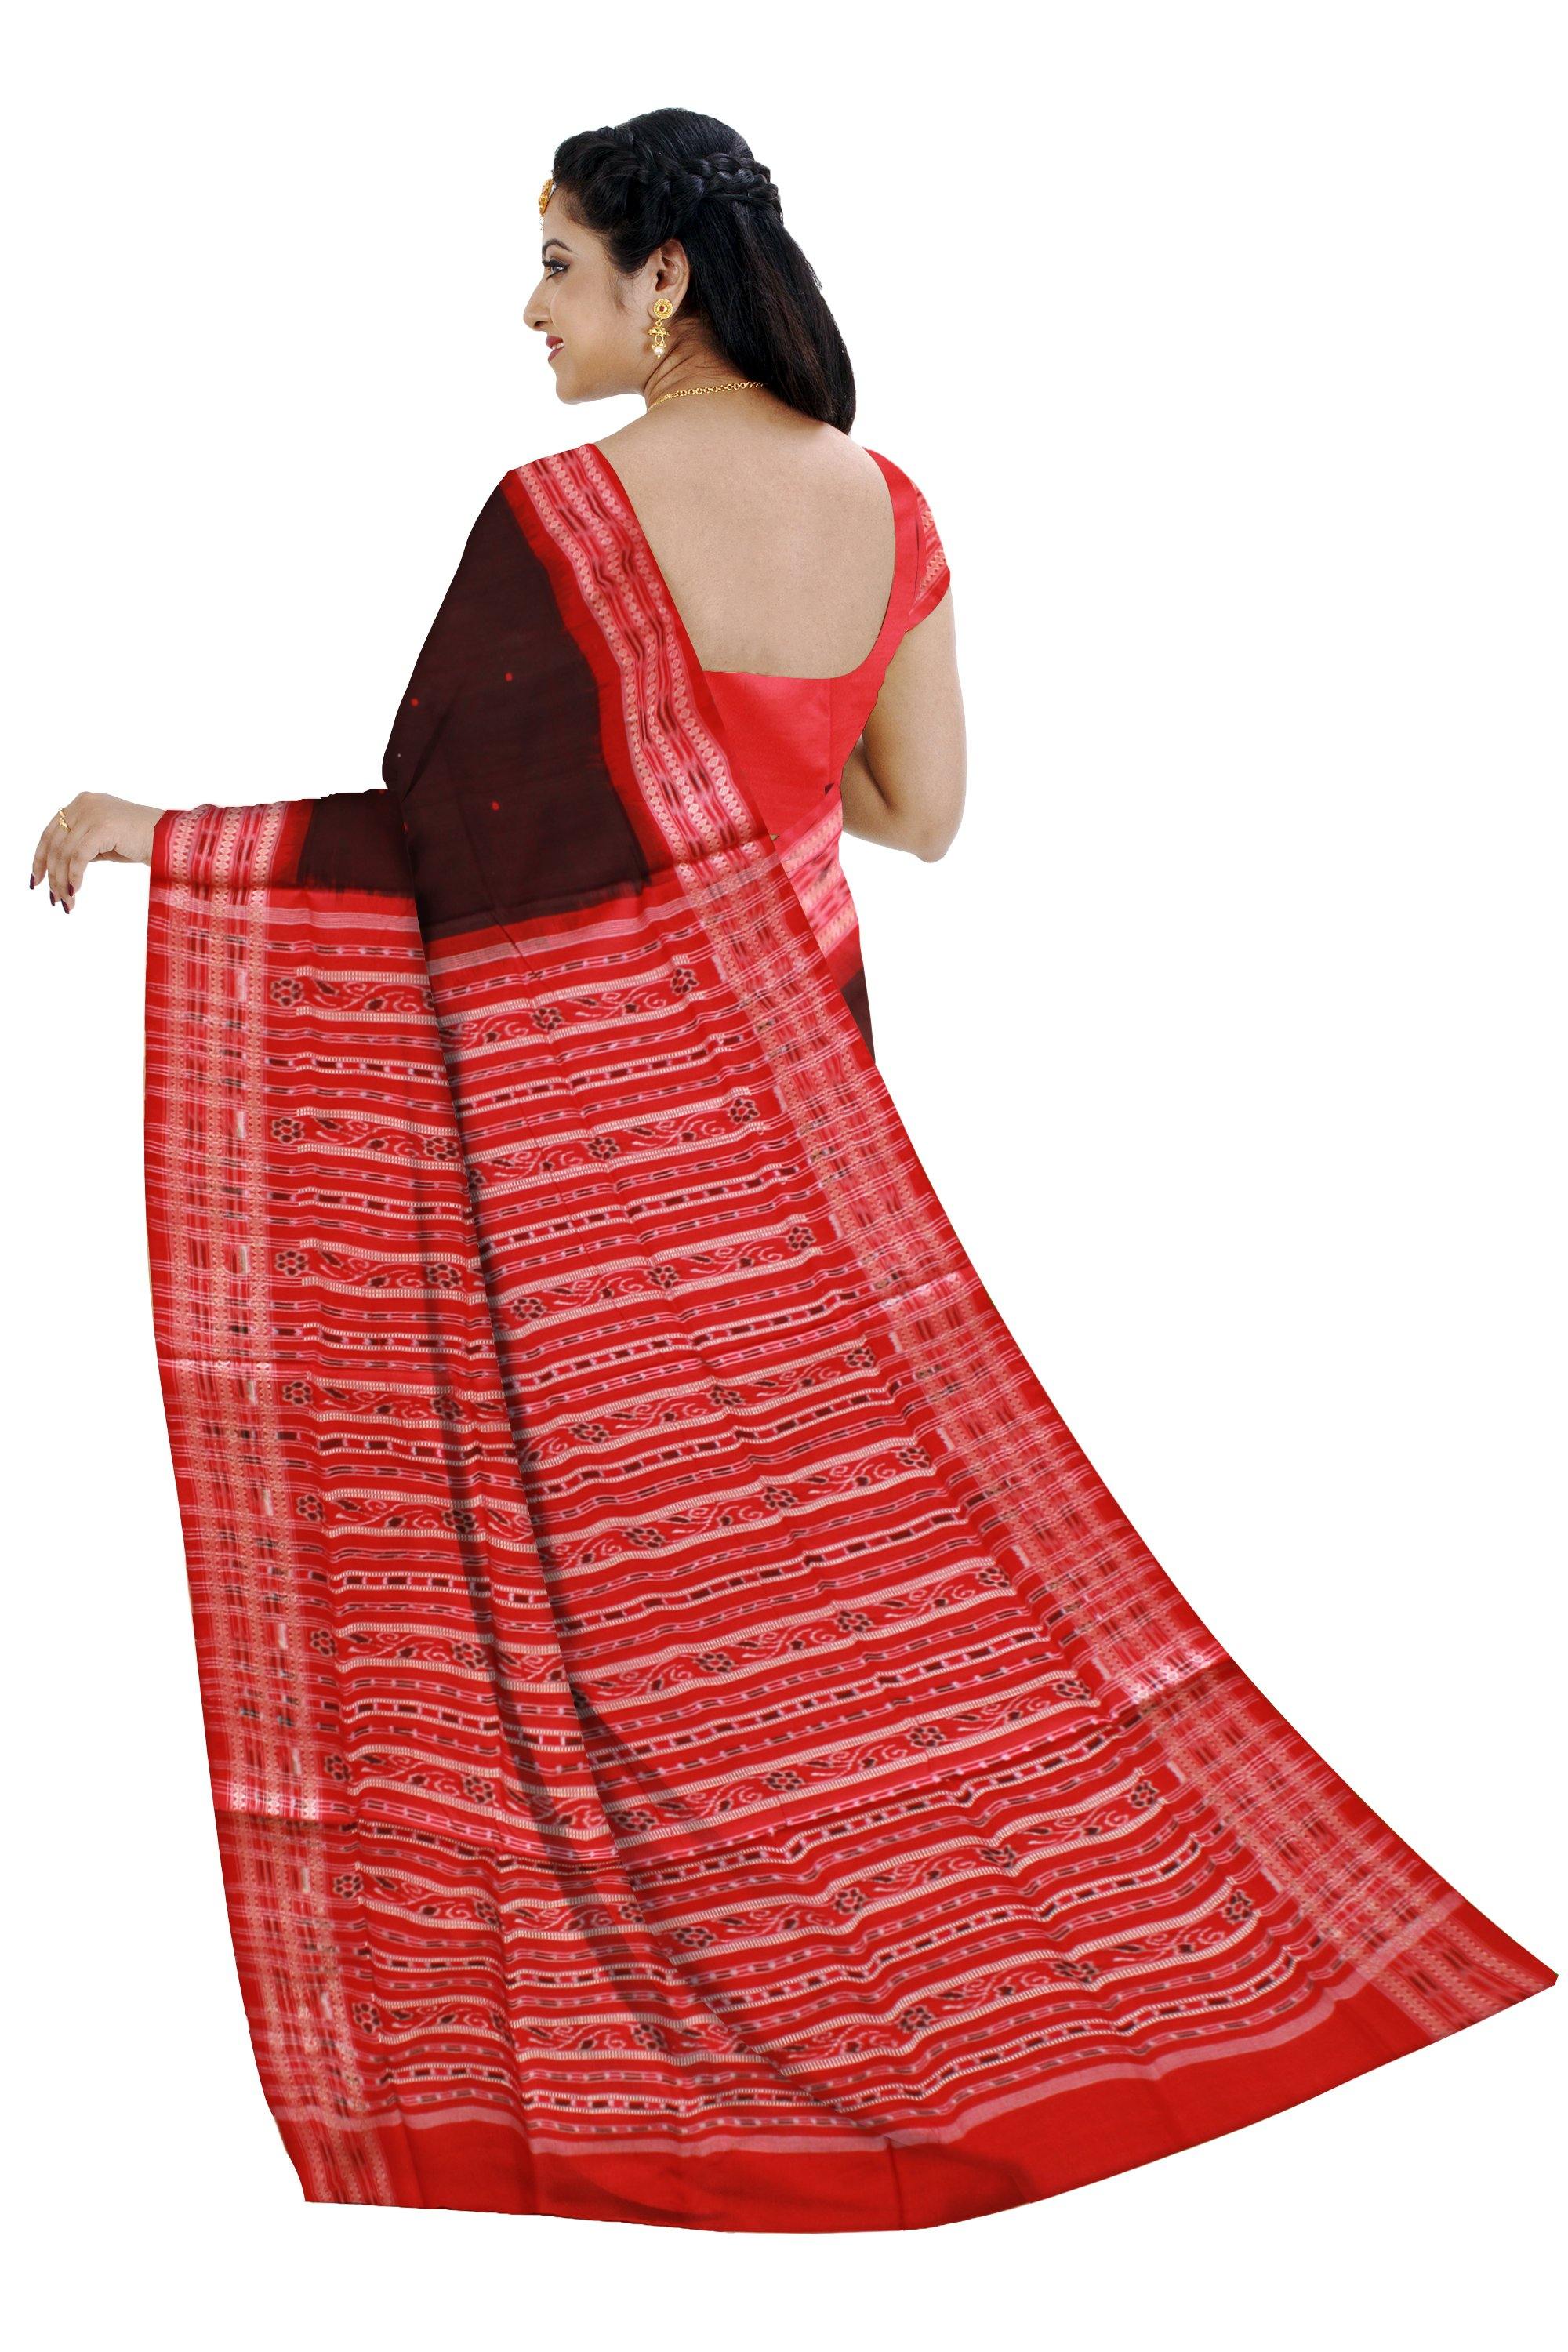 Brown color buti pattern sambalpuri cotton saree with blouse piece. - Koshali Arts & Crafts Enterprise